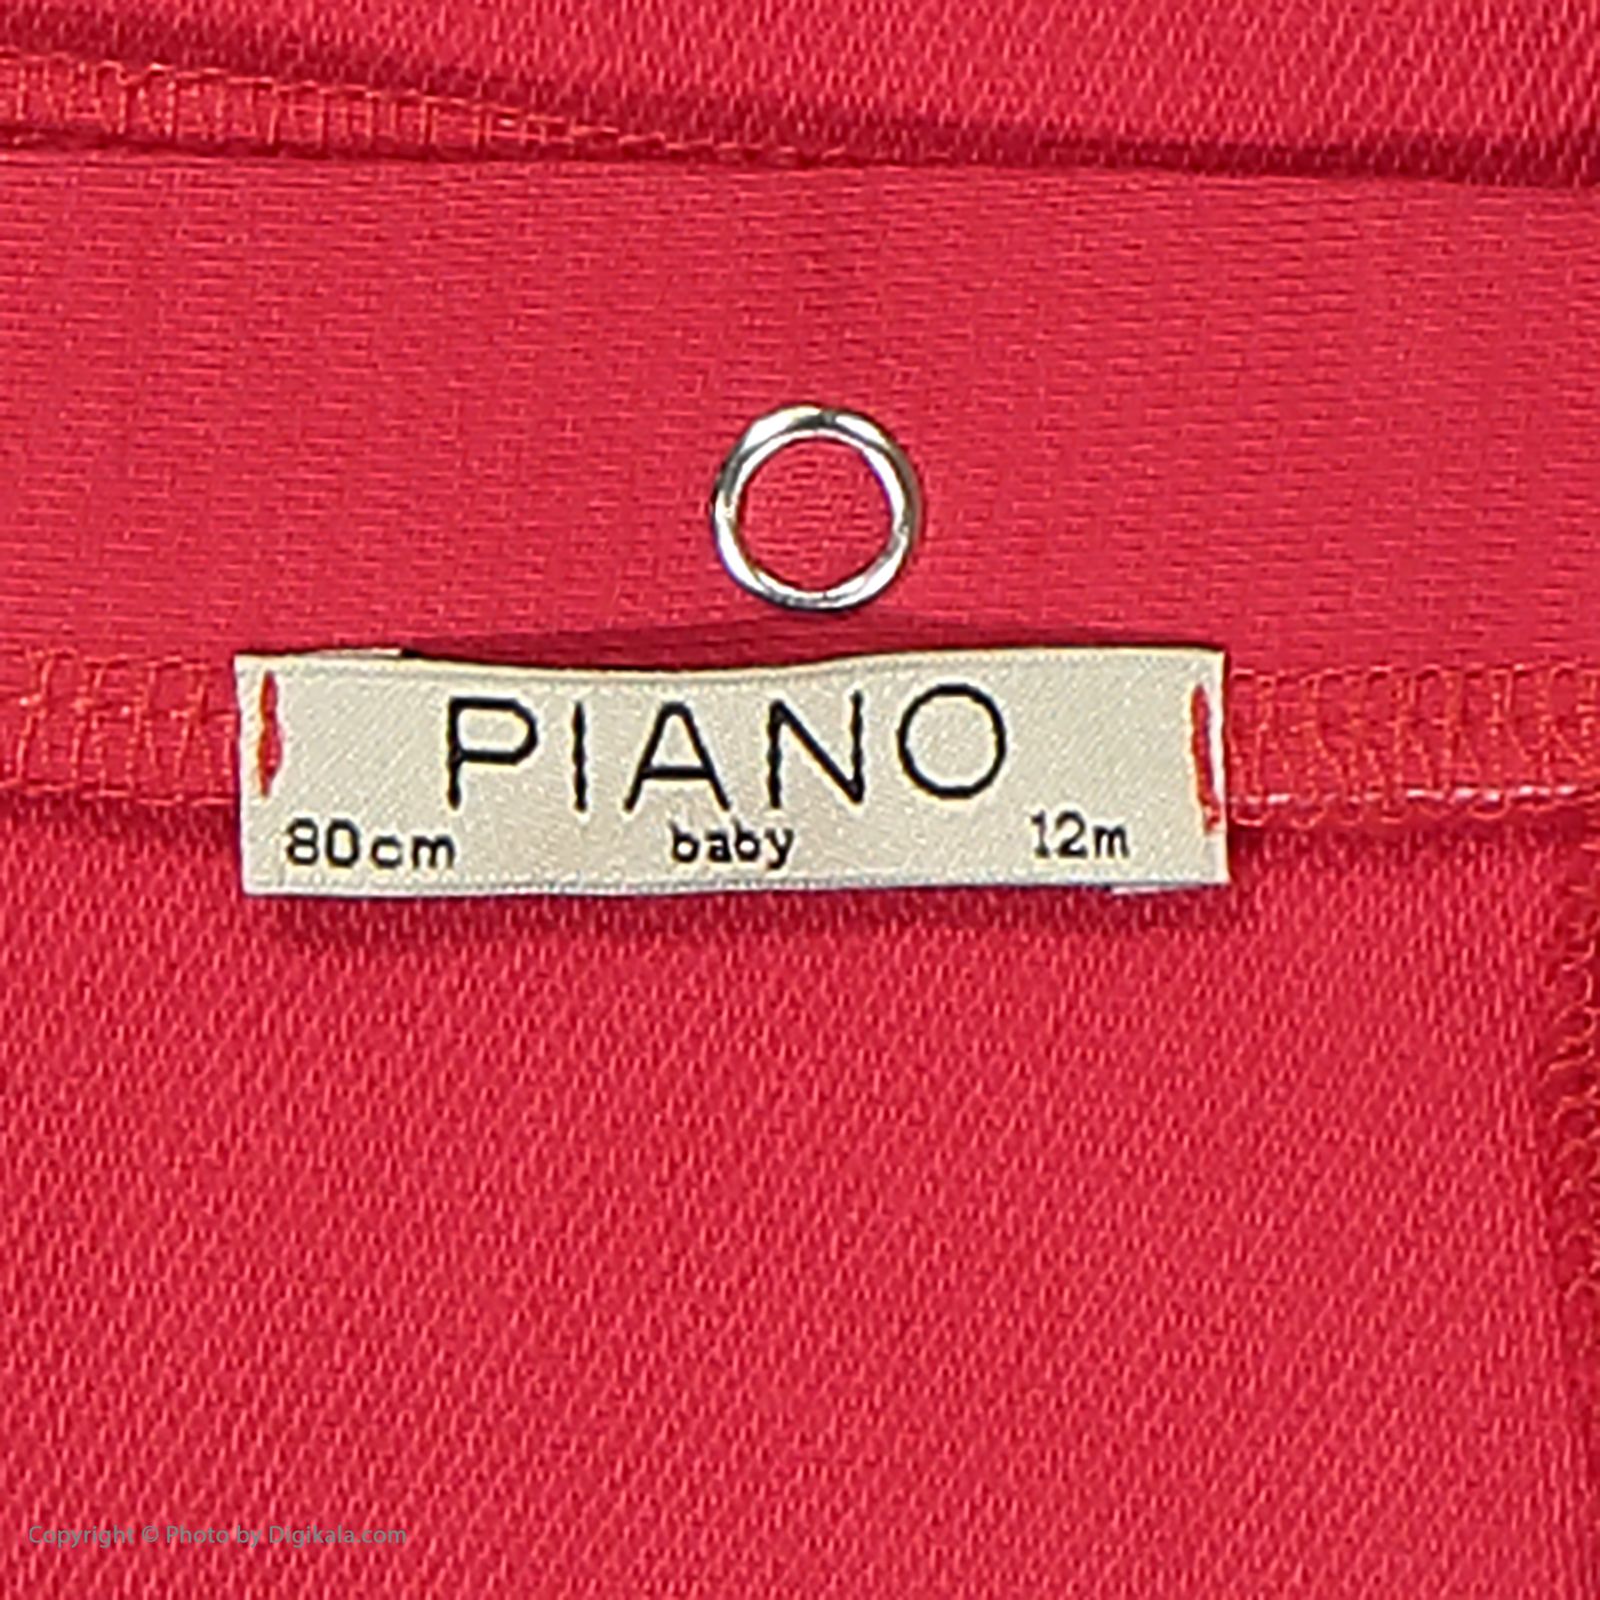 ست سویشرت و شلوار پسرانه پیانو مدل 1009009901746-72 -  - 9